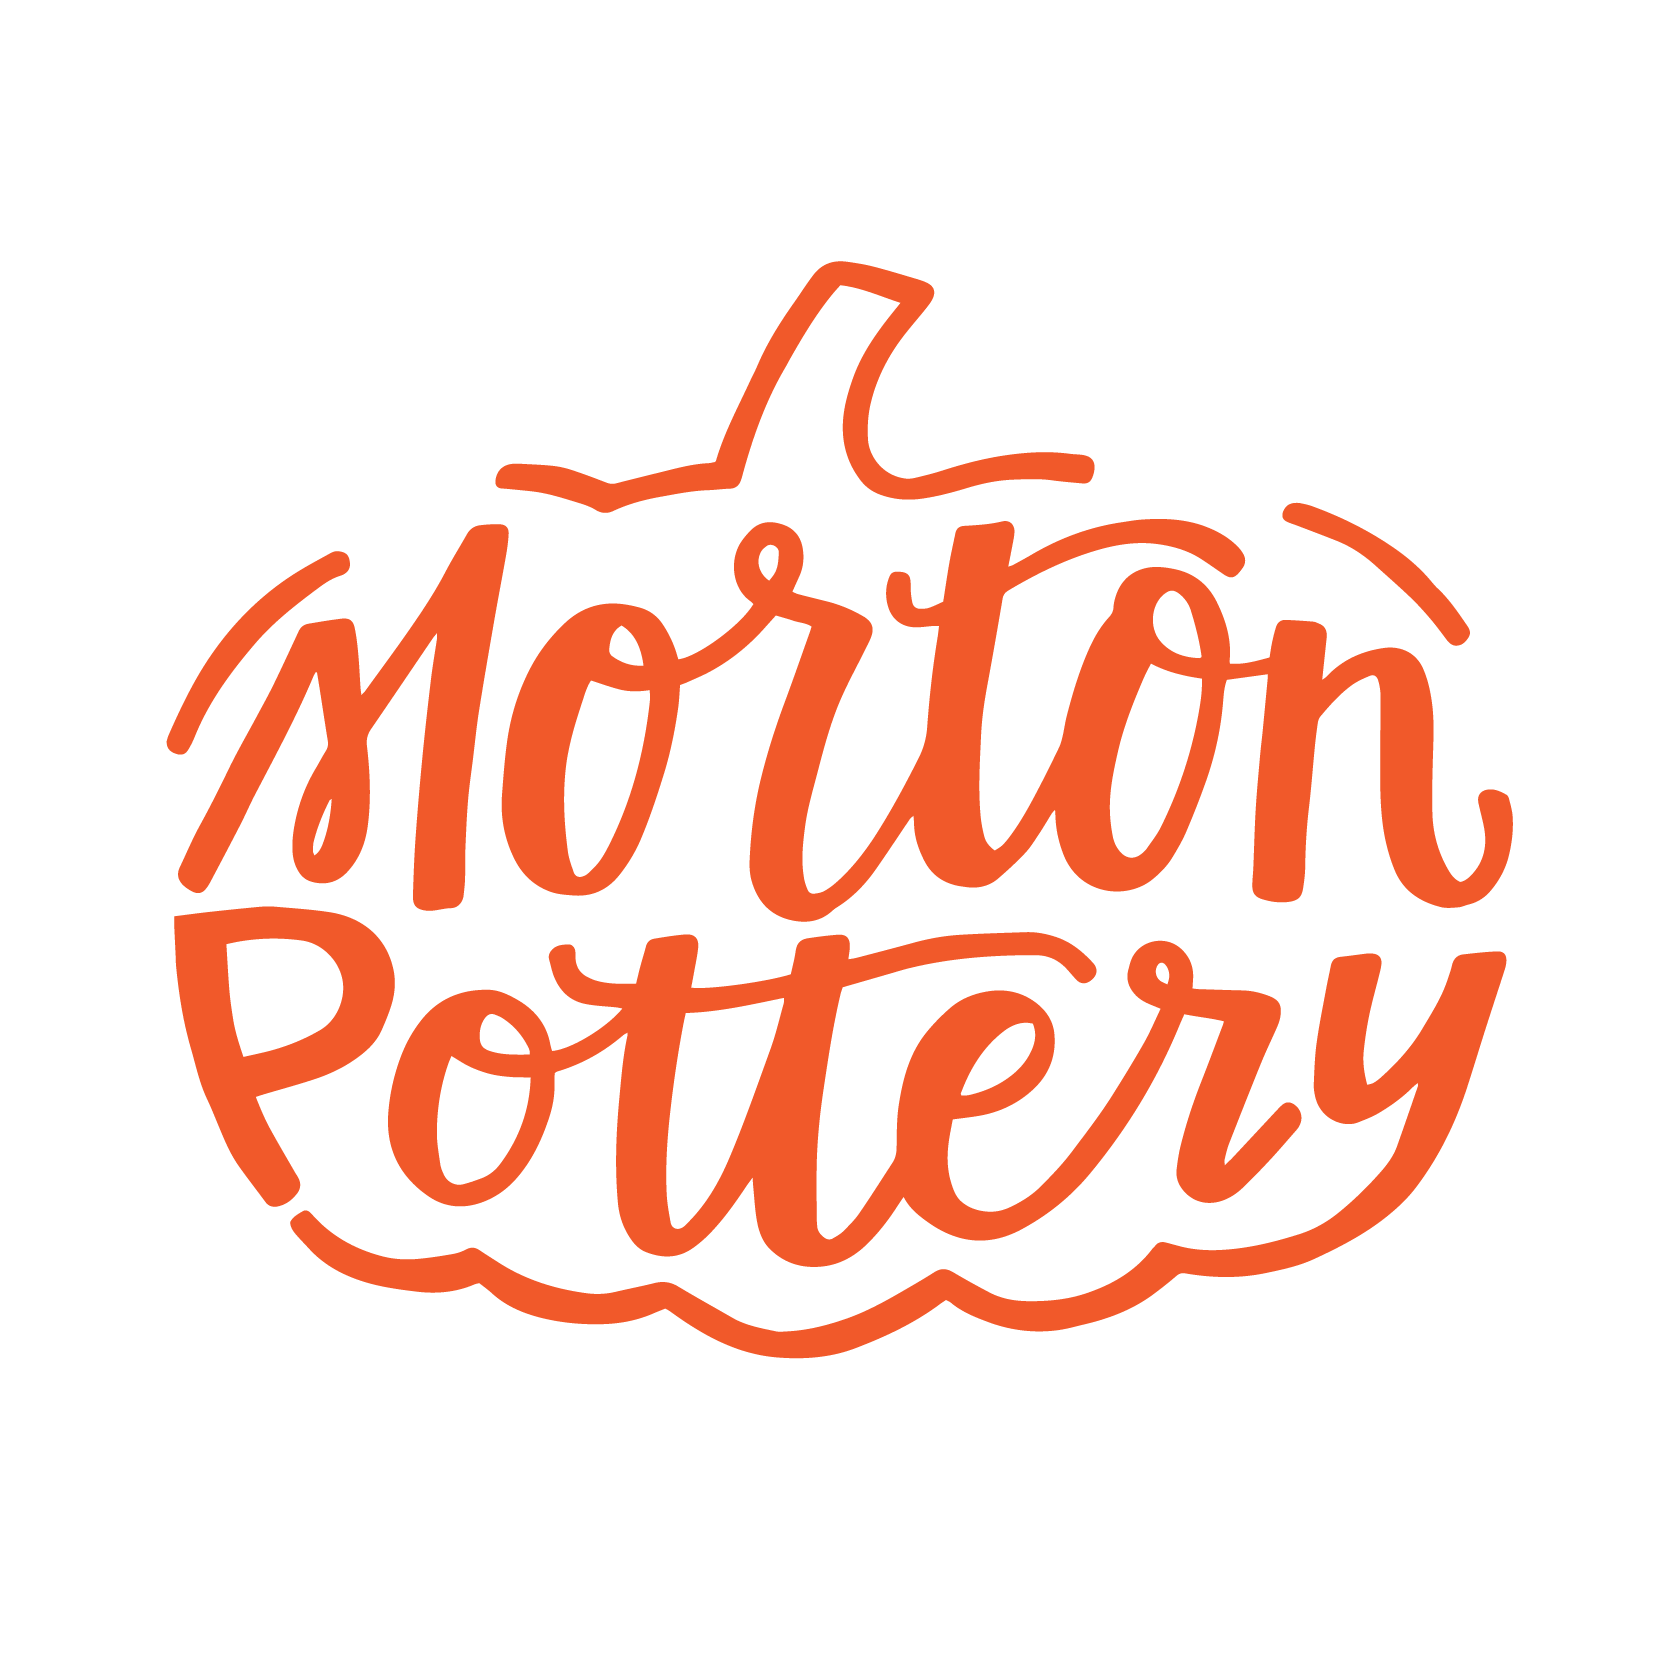 Copy of Morton Pottery Logo Design